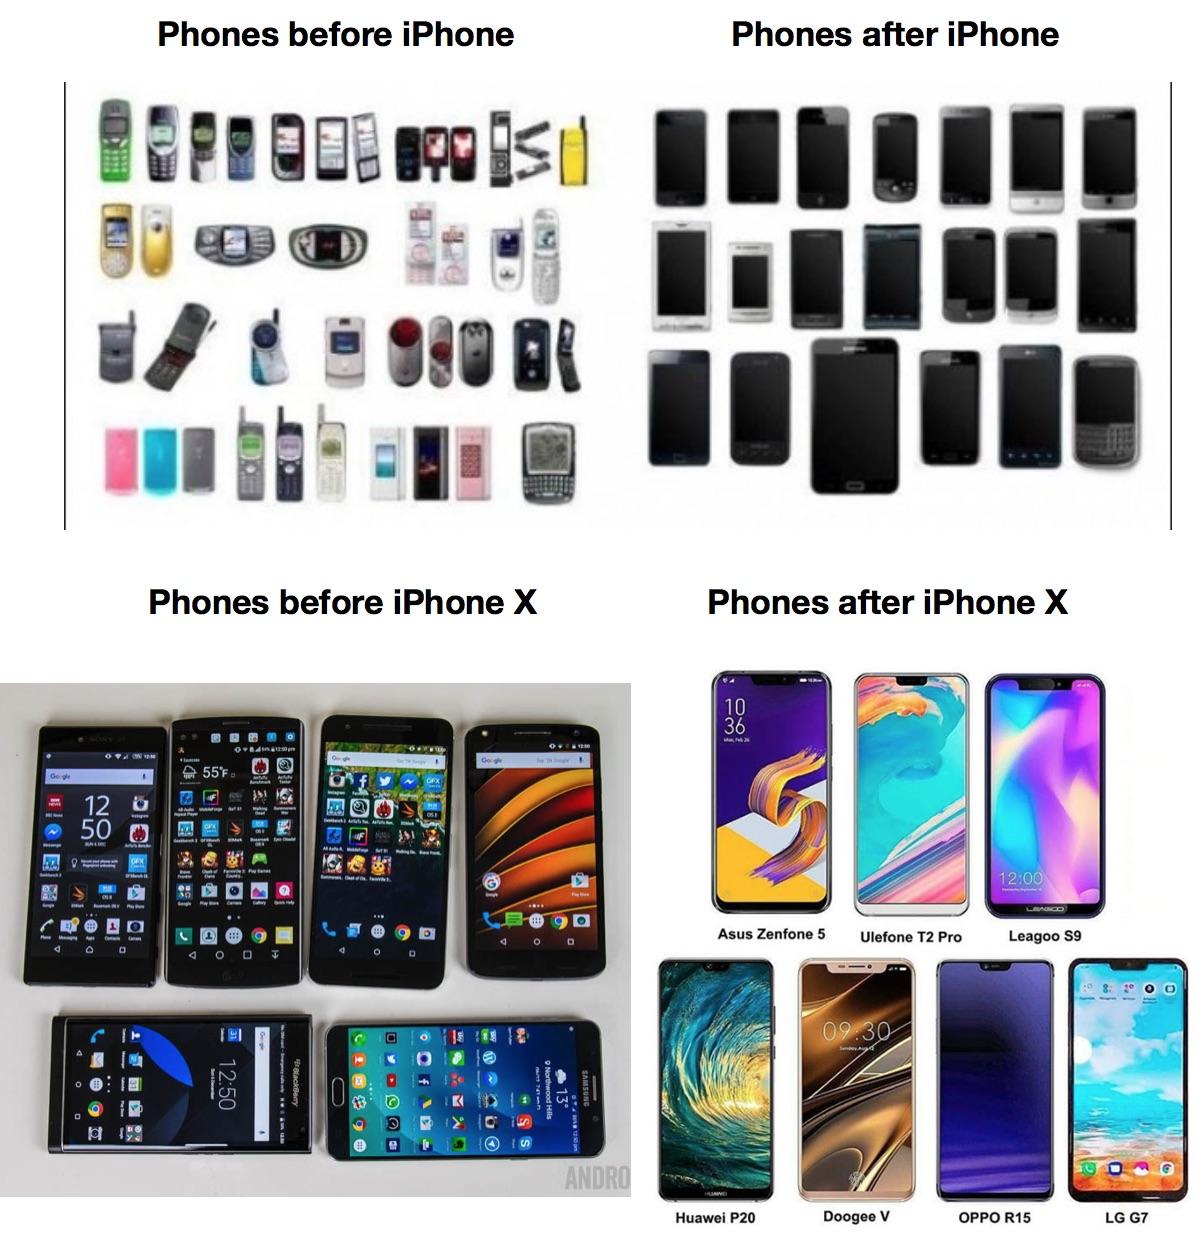 Phones mile. Phones before iphone. Before after с айфона. Аналог айфона по дизайну. Телефоны которые копируют дизайн айфона.